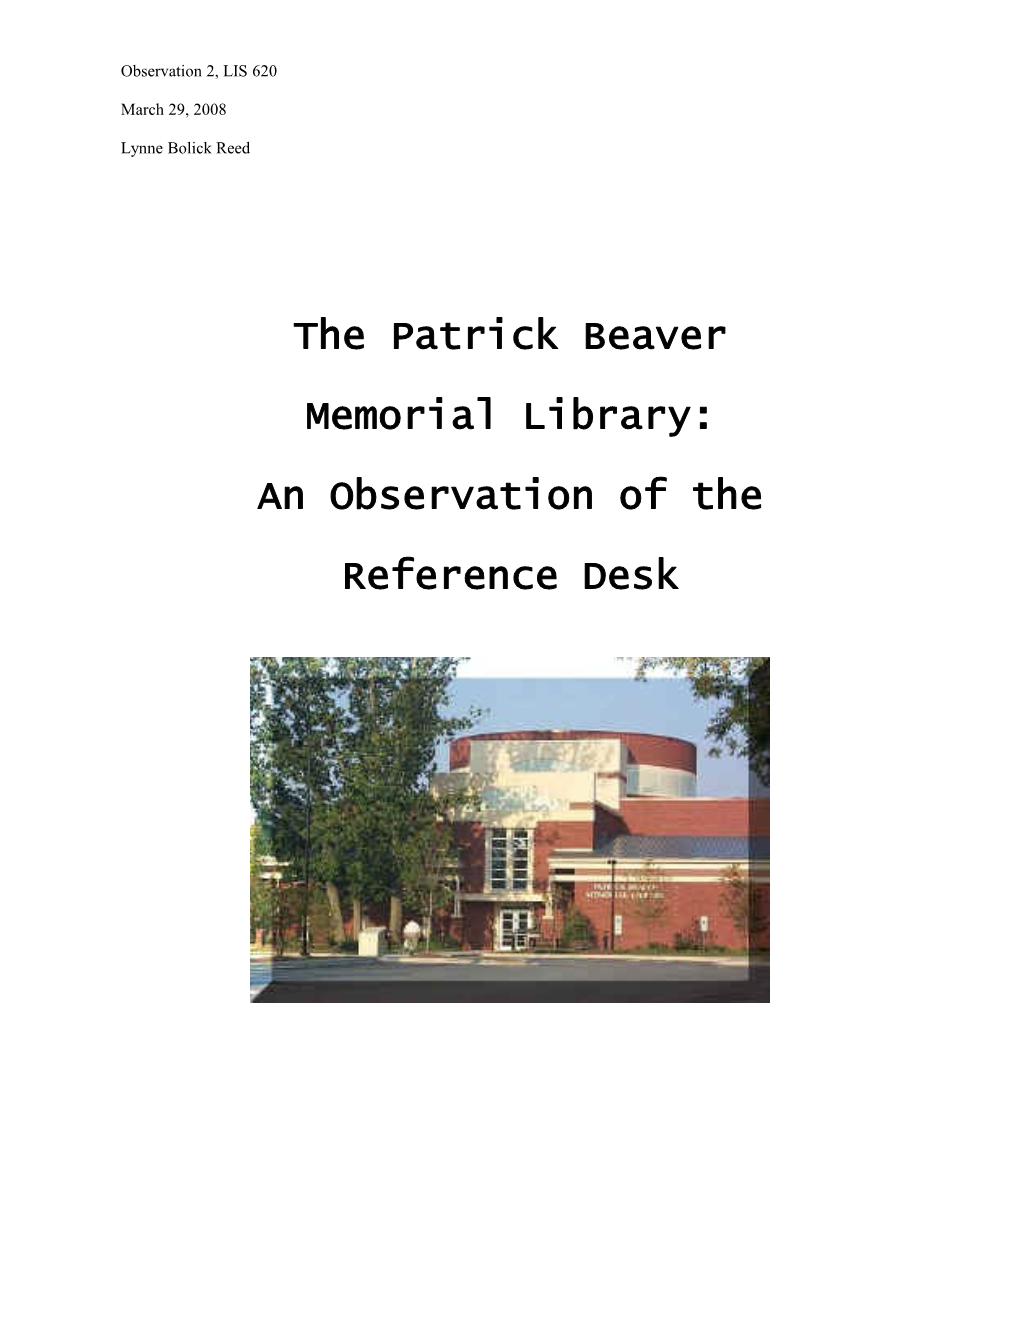 The Patrick Beaver